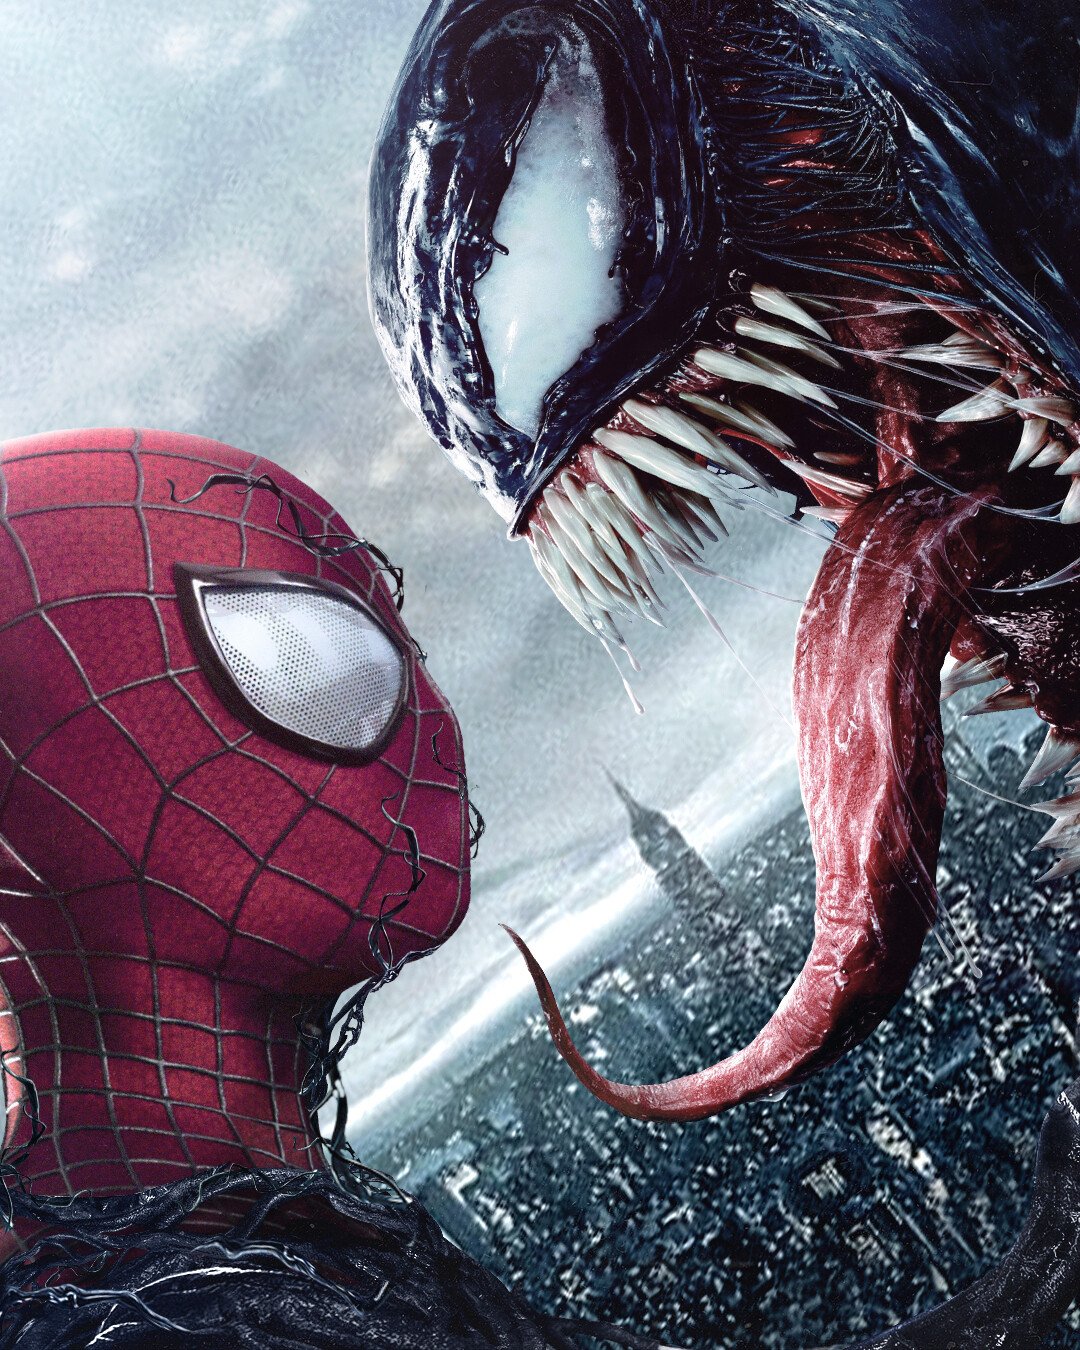 Ojalá Calibre heno ArtStation - The Amazing Spider-Man vs Venom